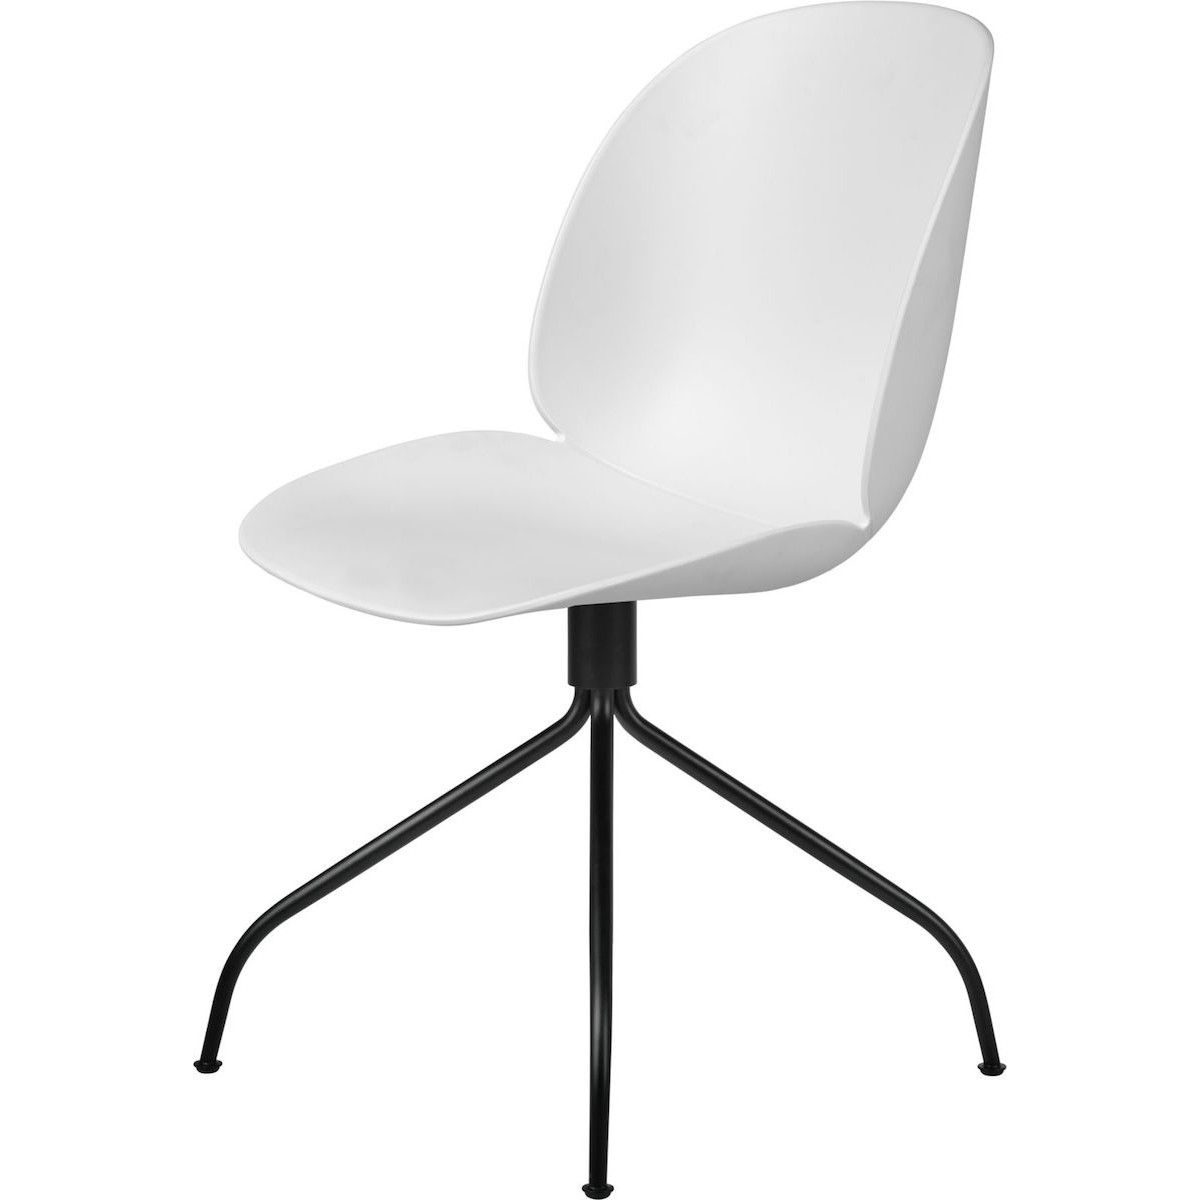 Beetle meeting chair - swivel base - white shell + black legs